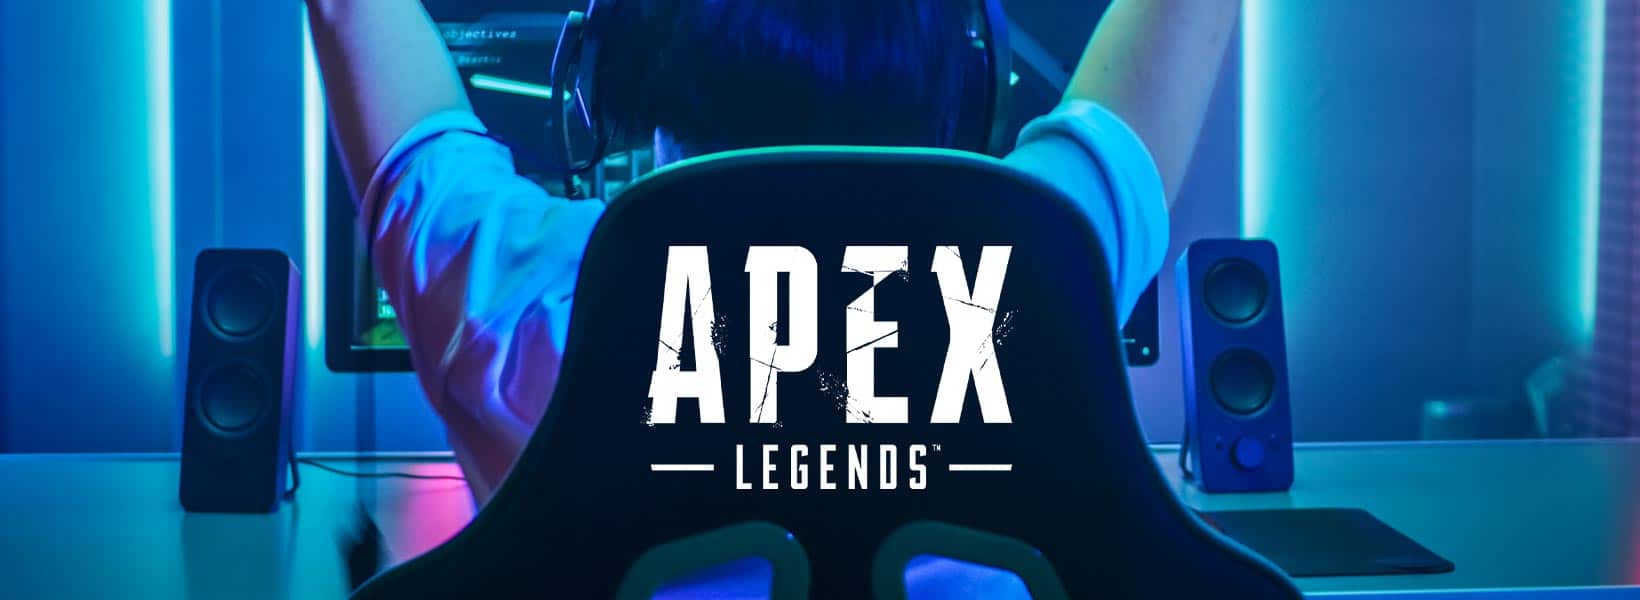 apex legends esports